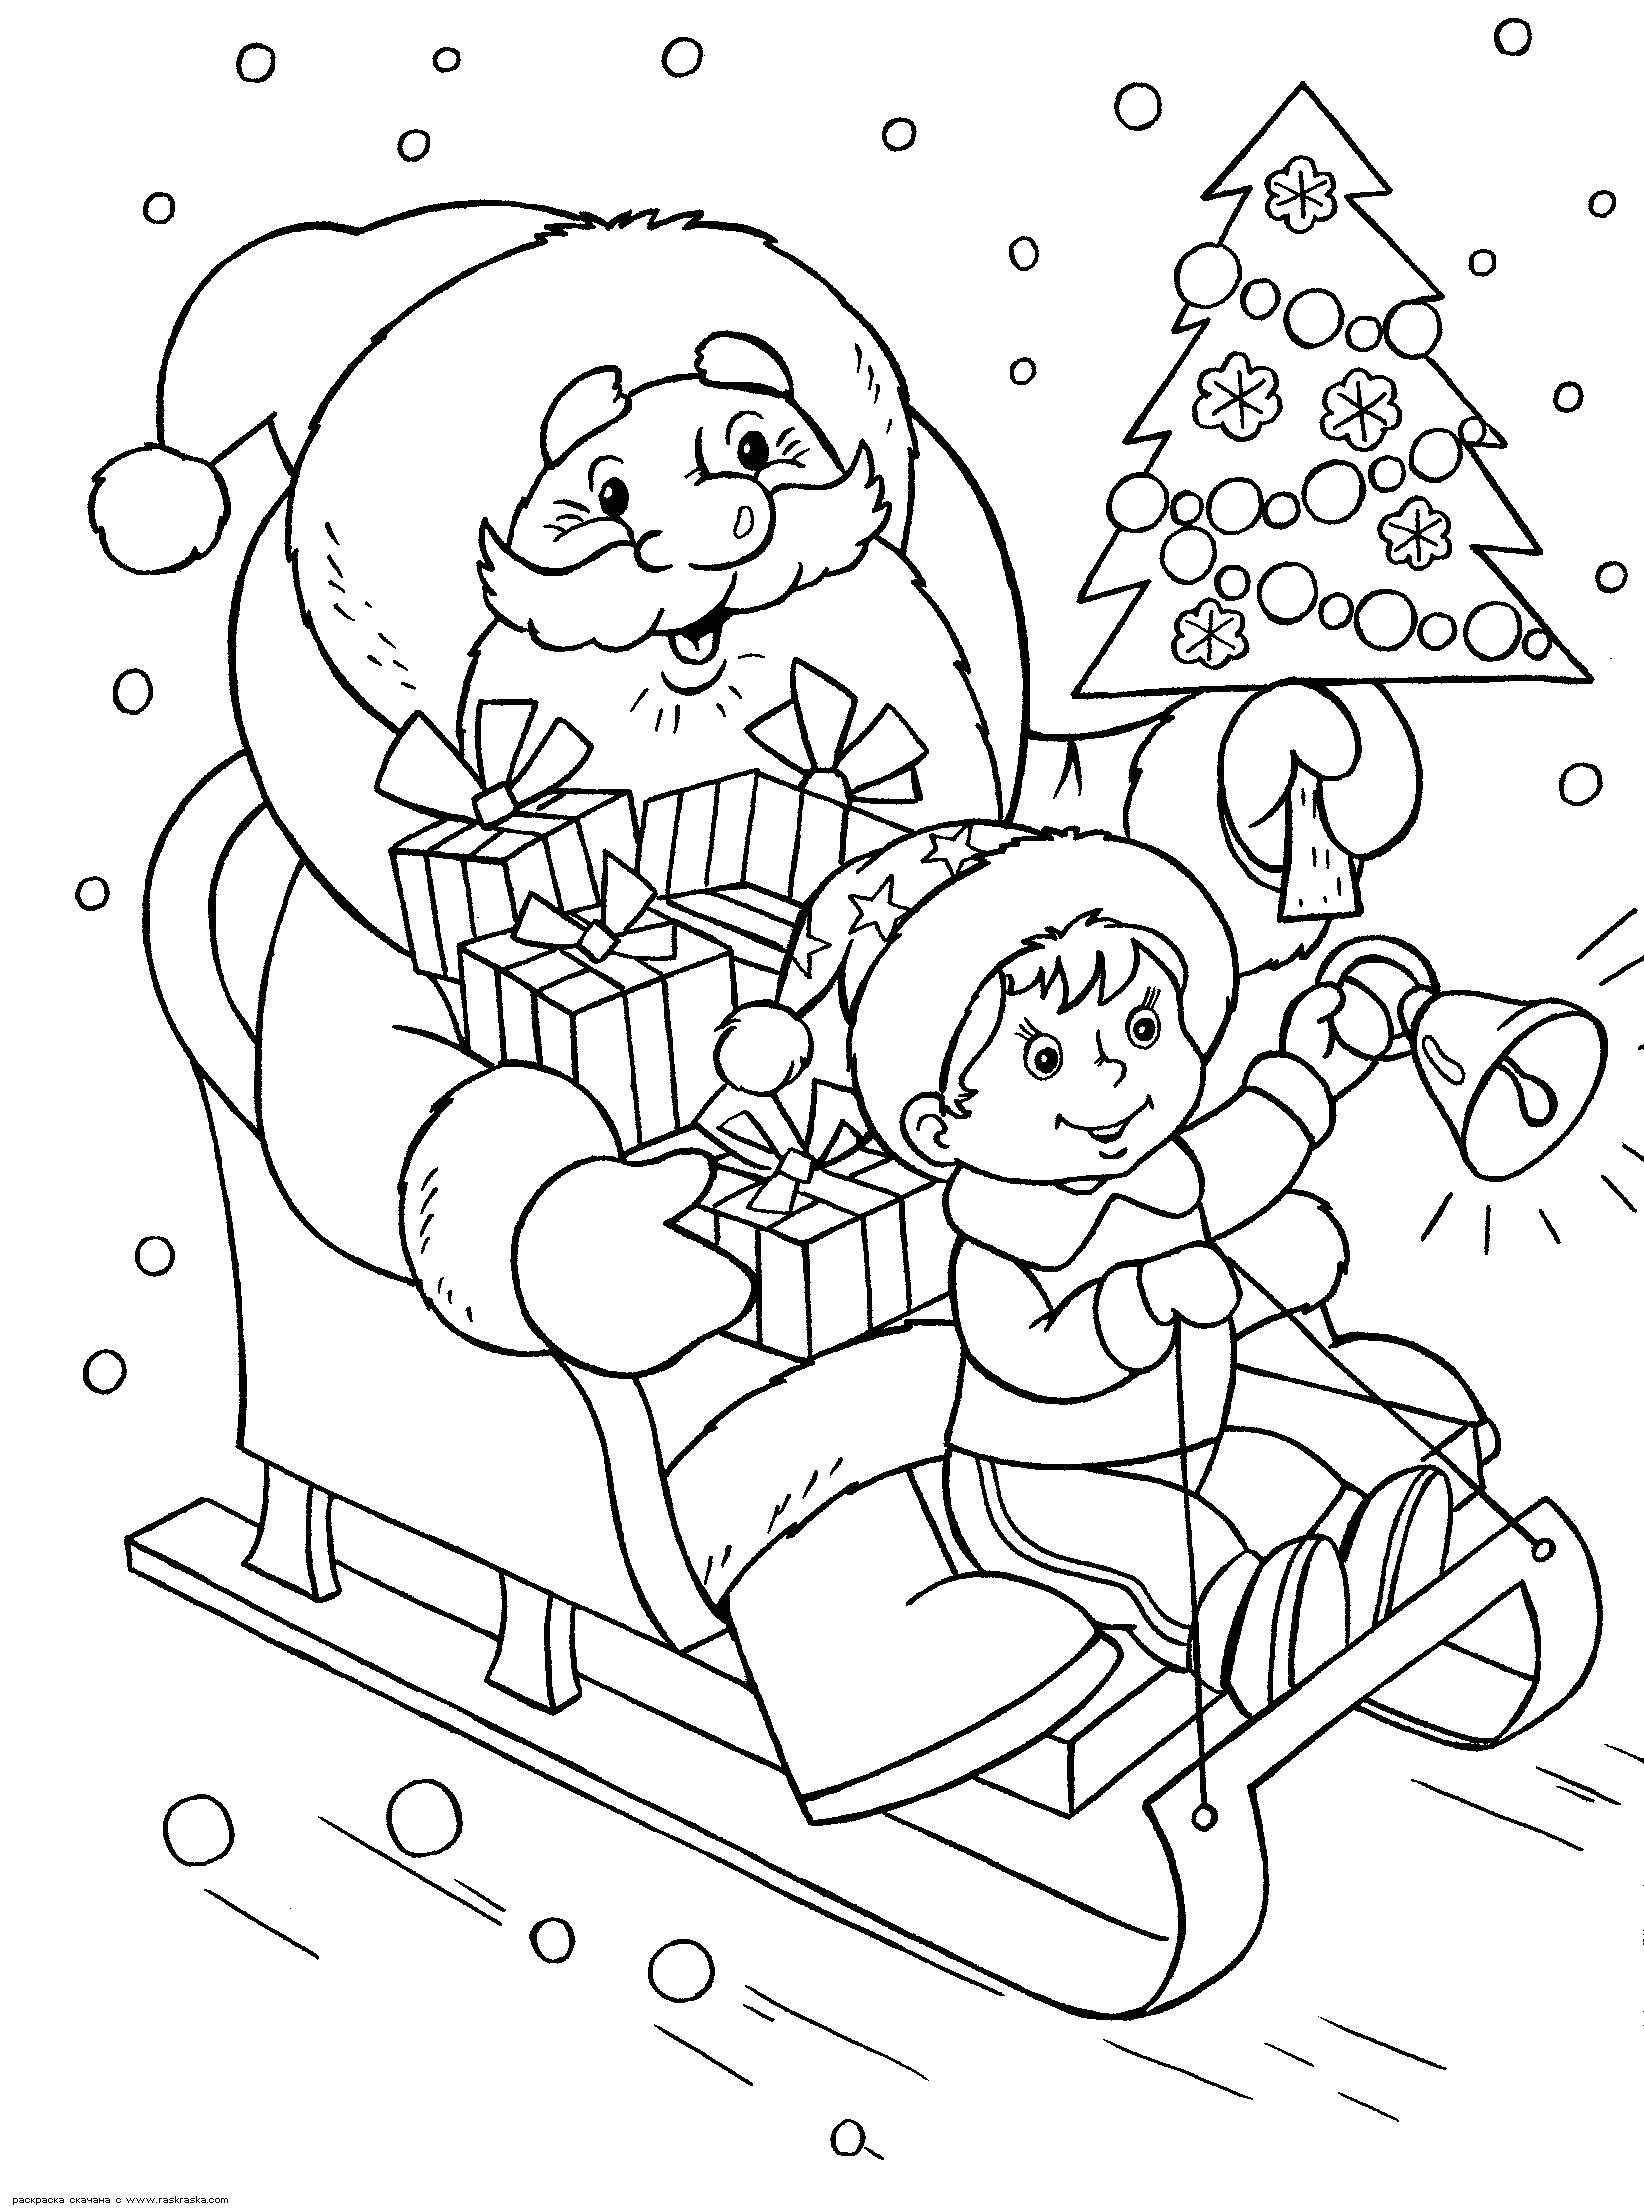 Snow Maiden and Santa Claus